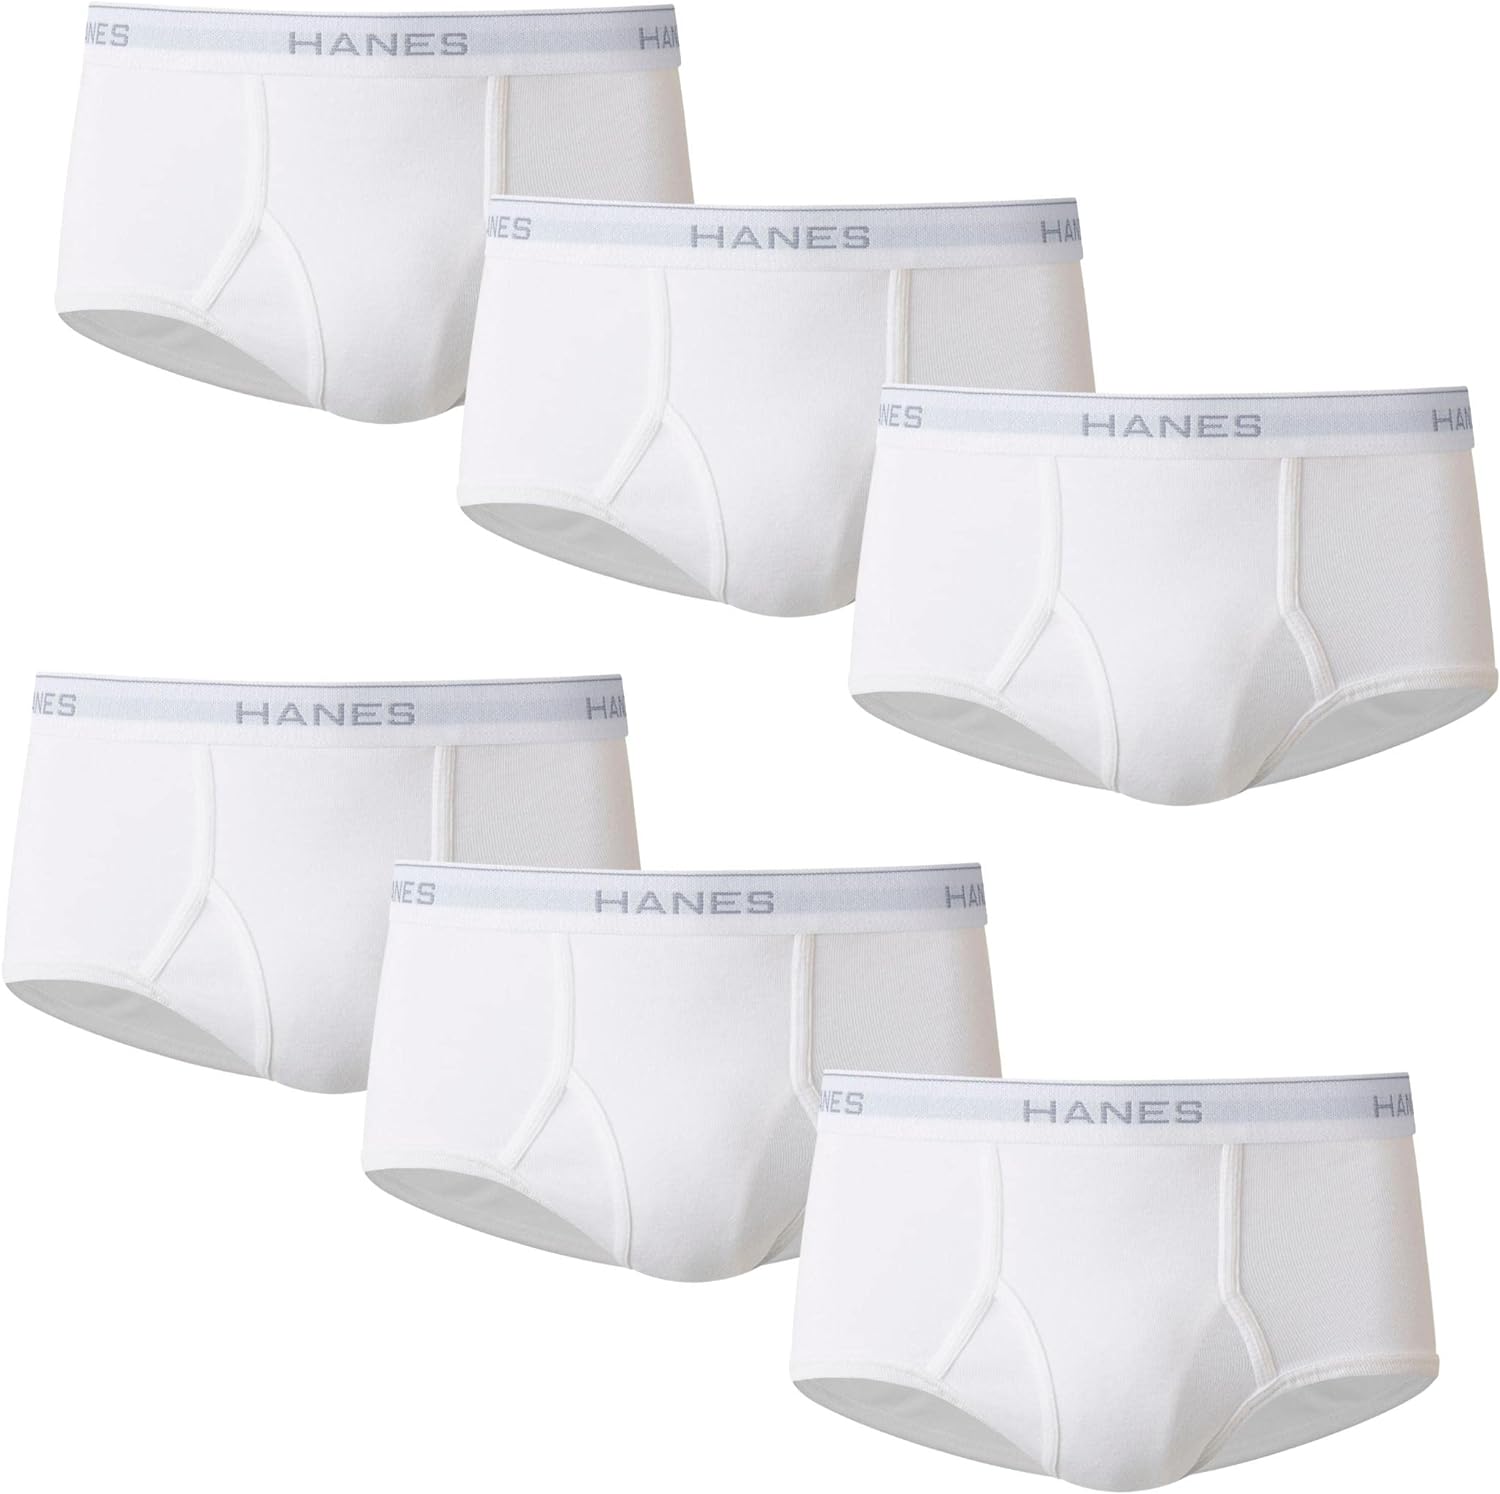 Hanes Men's Value Pack White Briefs, 6 Pack - image 1 of 9